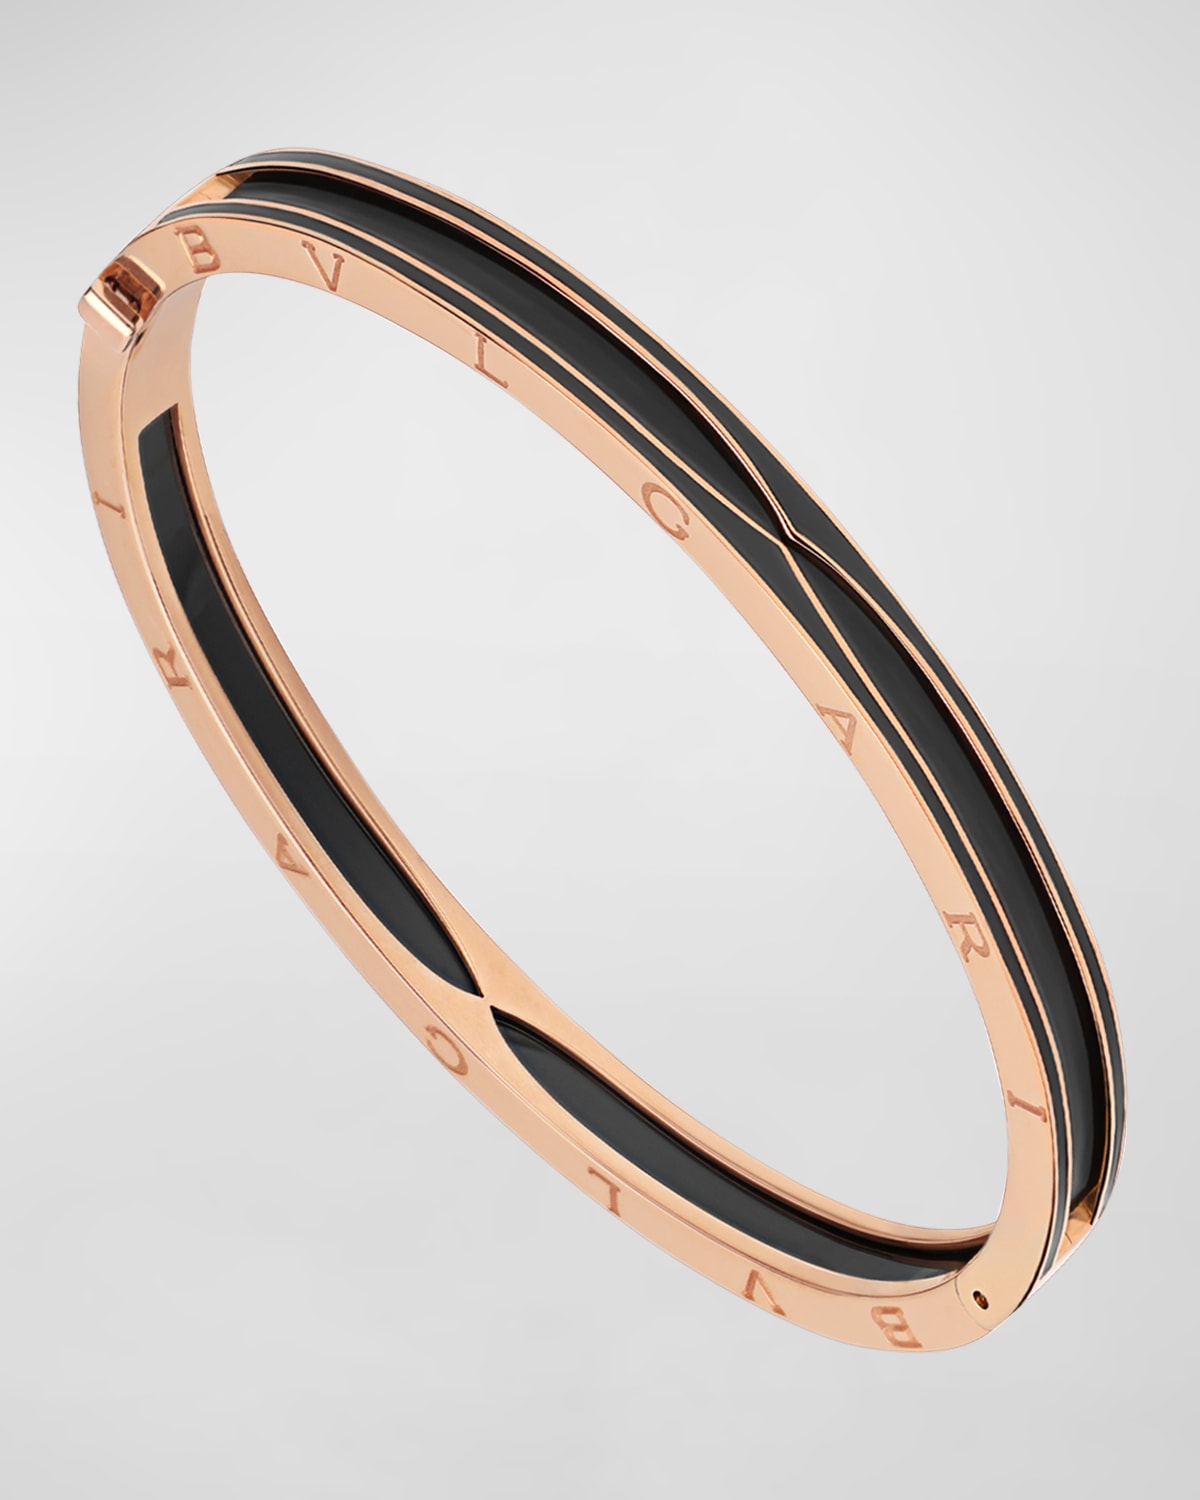 B.Zero1 Rose Gold Bracelet with Matte Black Ceramic Edge, Size XL